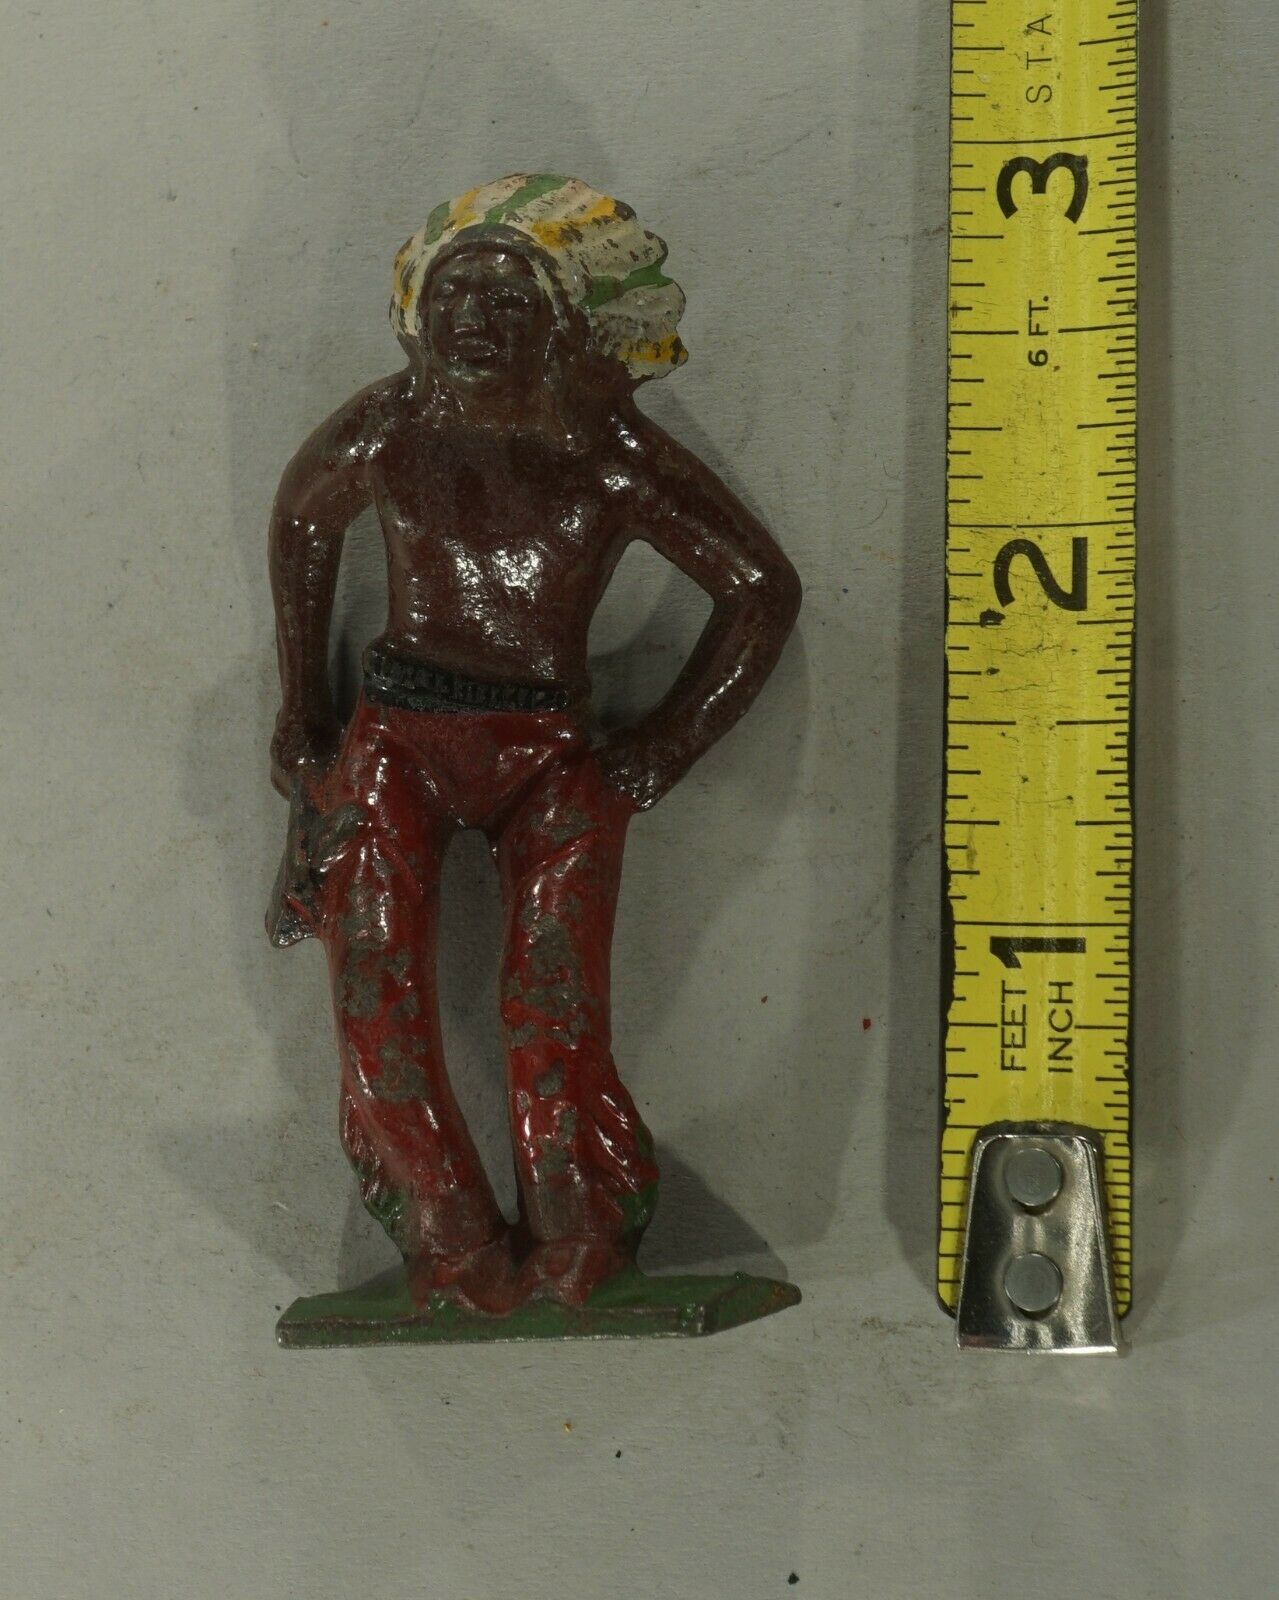 Original Vintage Antique Toy Native American Indian Lead Figure (inv. No. 9152)